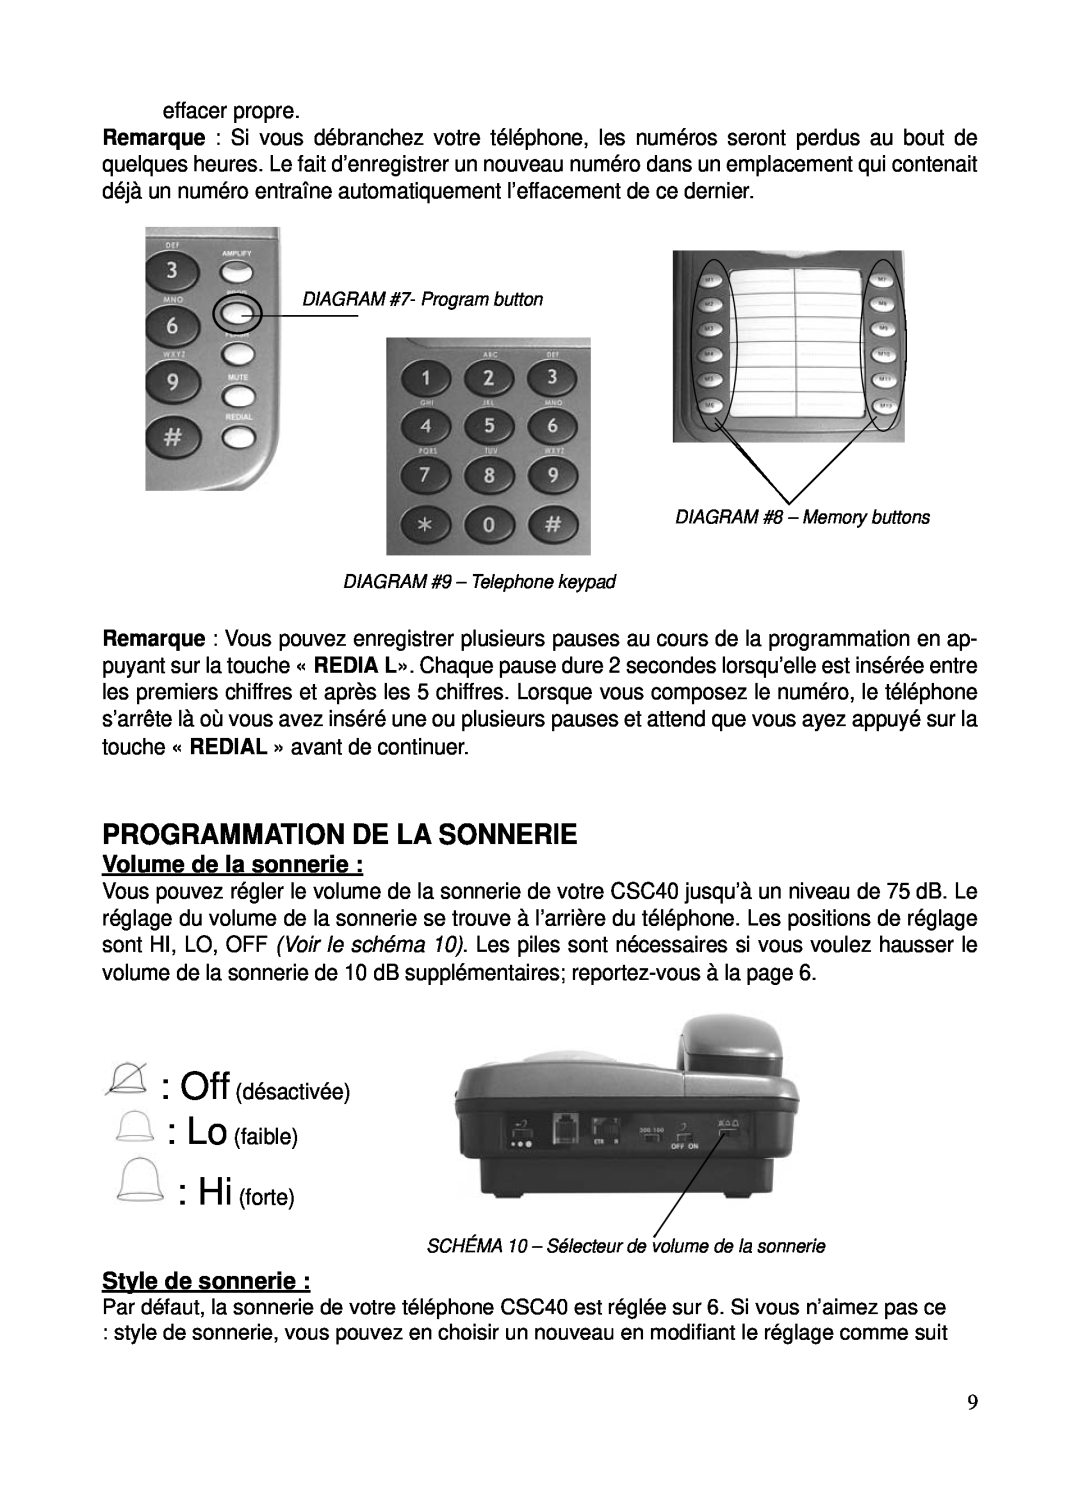 ClearSounds CSC40 user manual Programmation De La Sonnerie, Volume de la sonnerie, Style de sonnerie 